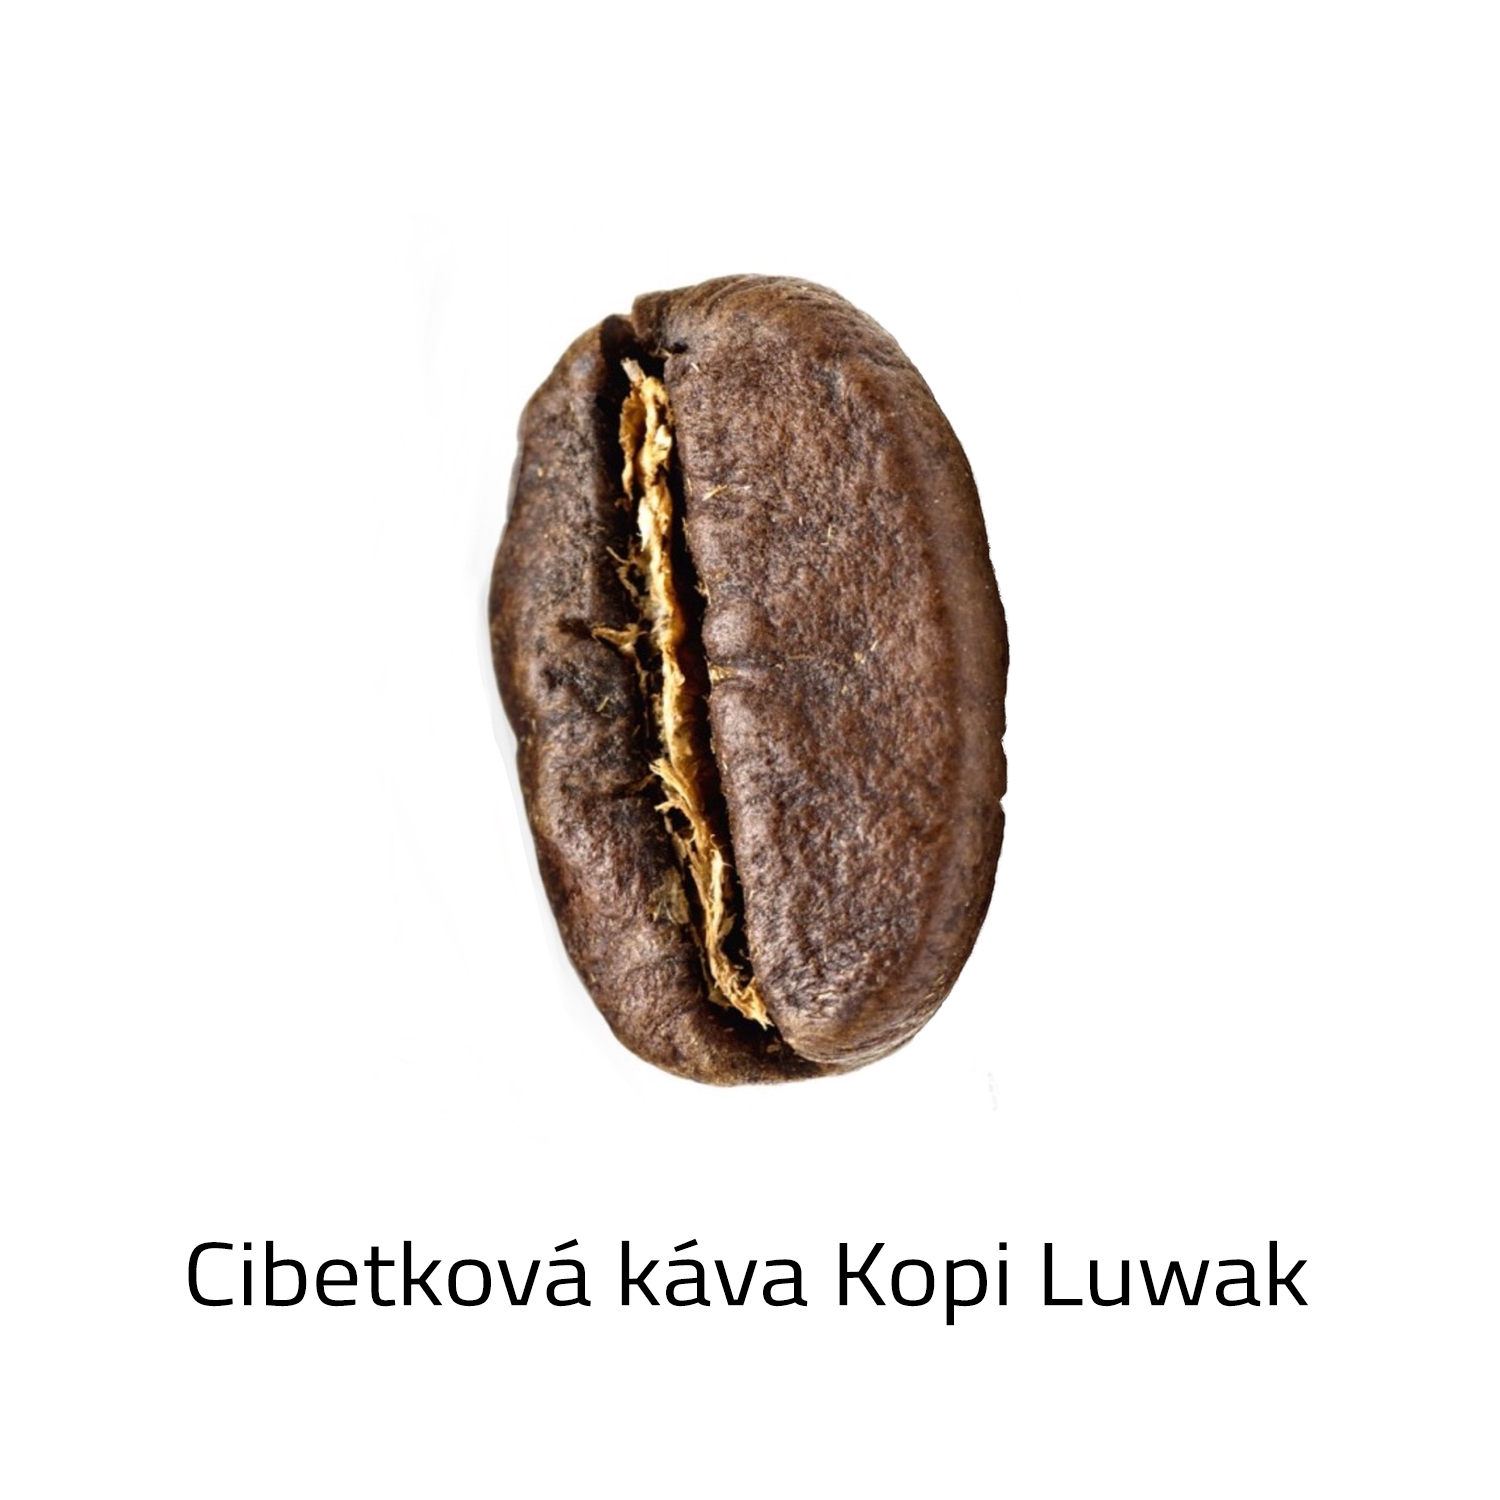 Čerstvě pražená Cibetková káva mletá - Kopi Luwak 